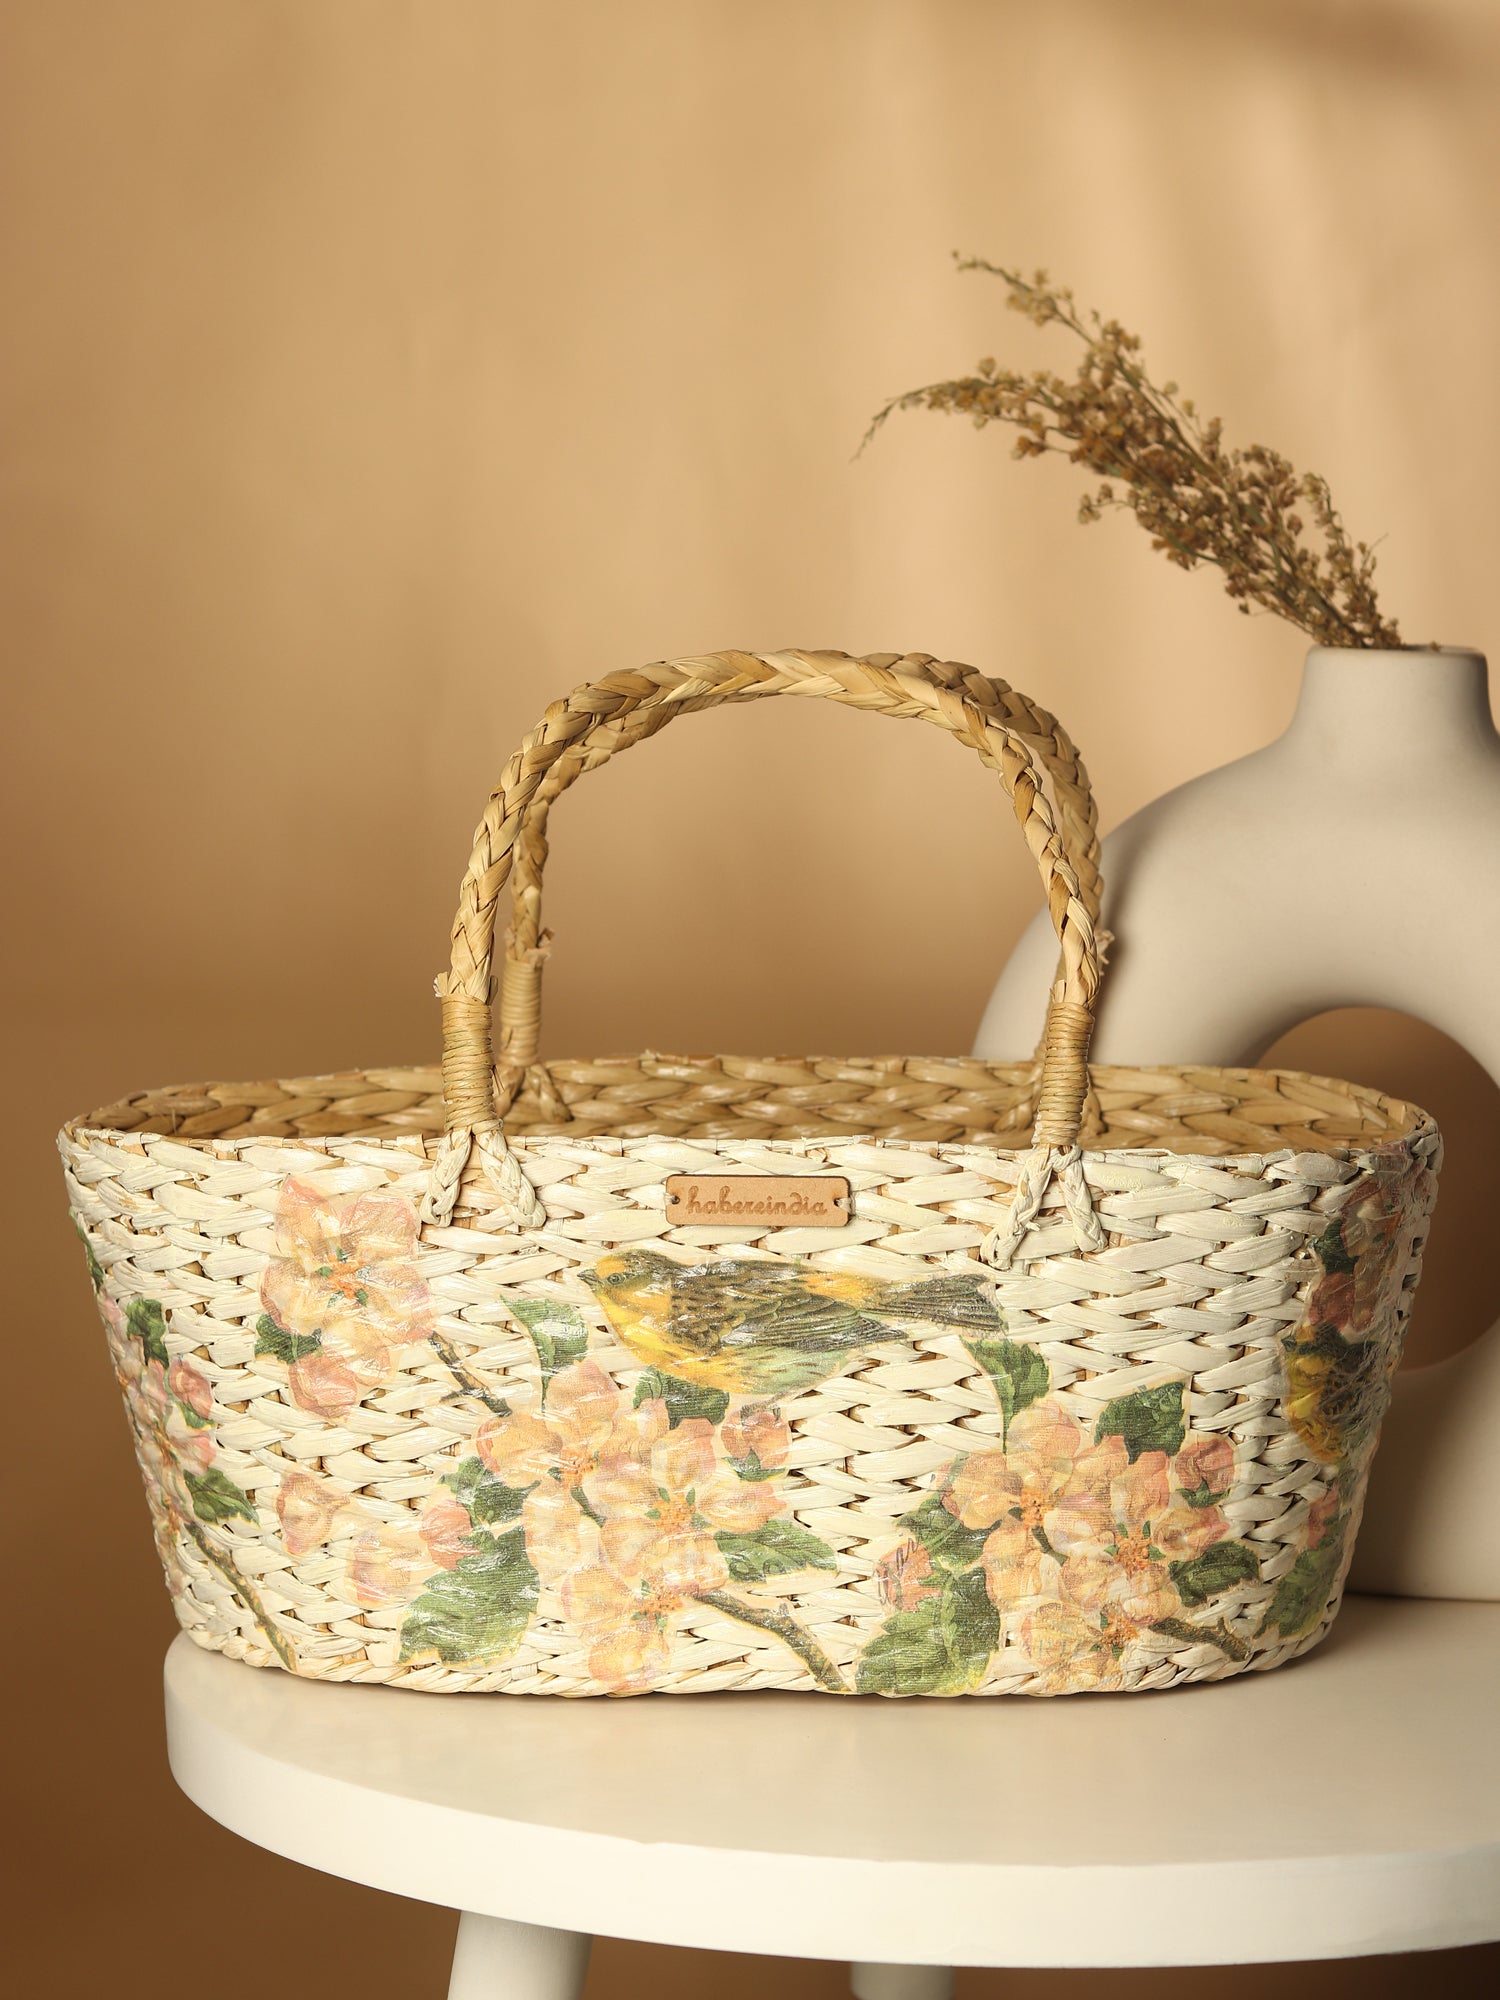 Bday Gift Hamper Basket For Her | Best Online Birthday Gifts